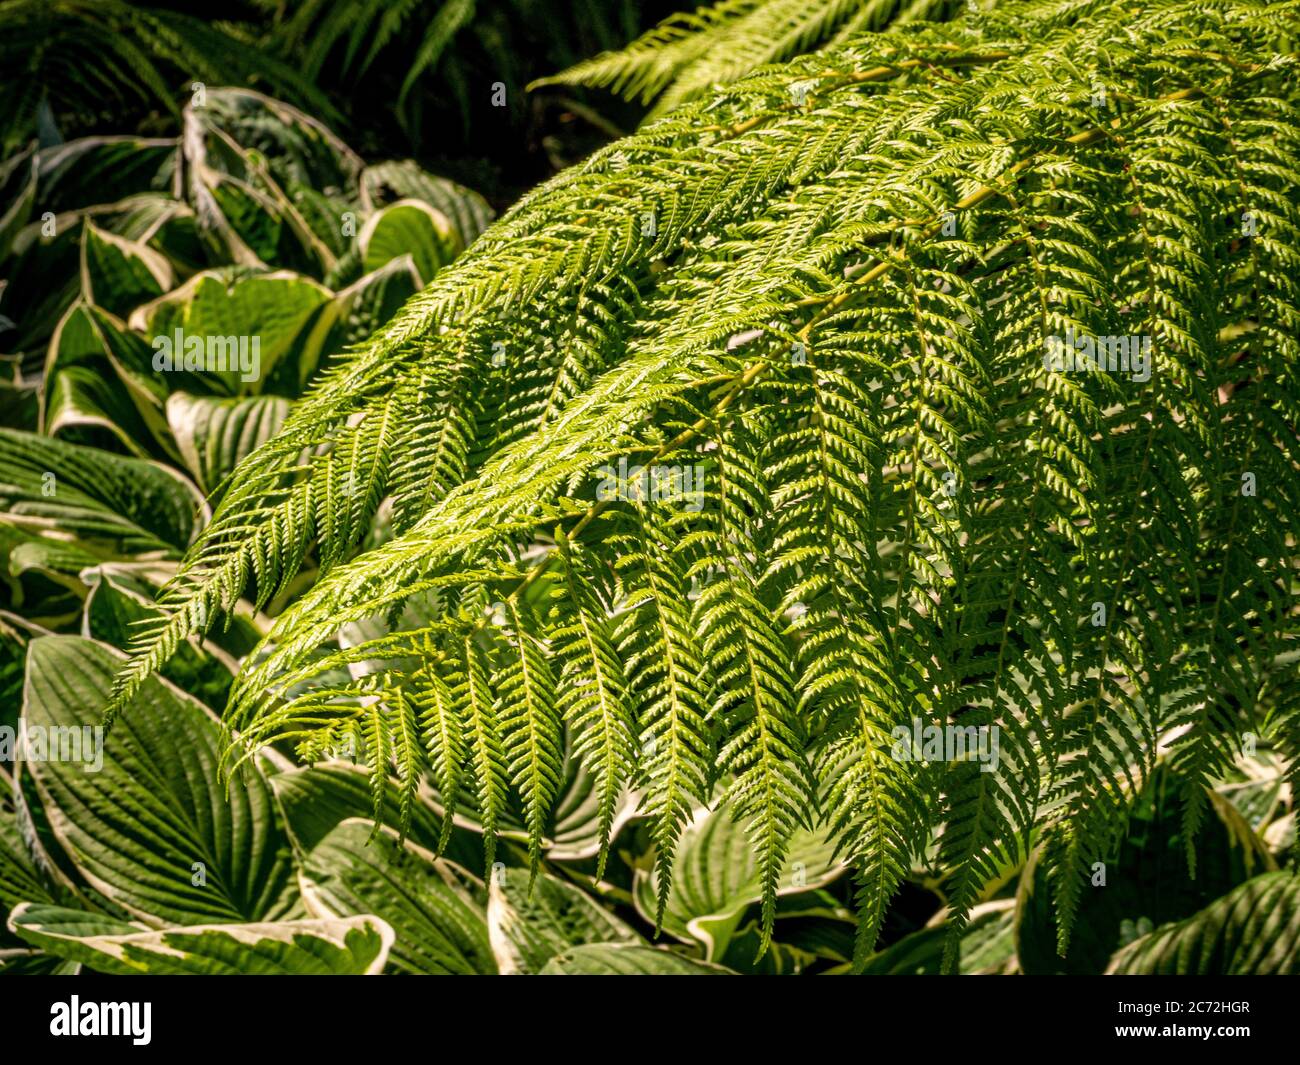 Sunlit ferns and hostas growing in a garden. Stock Photo